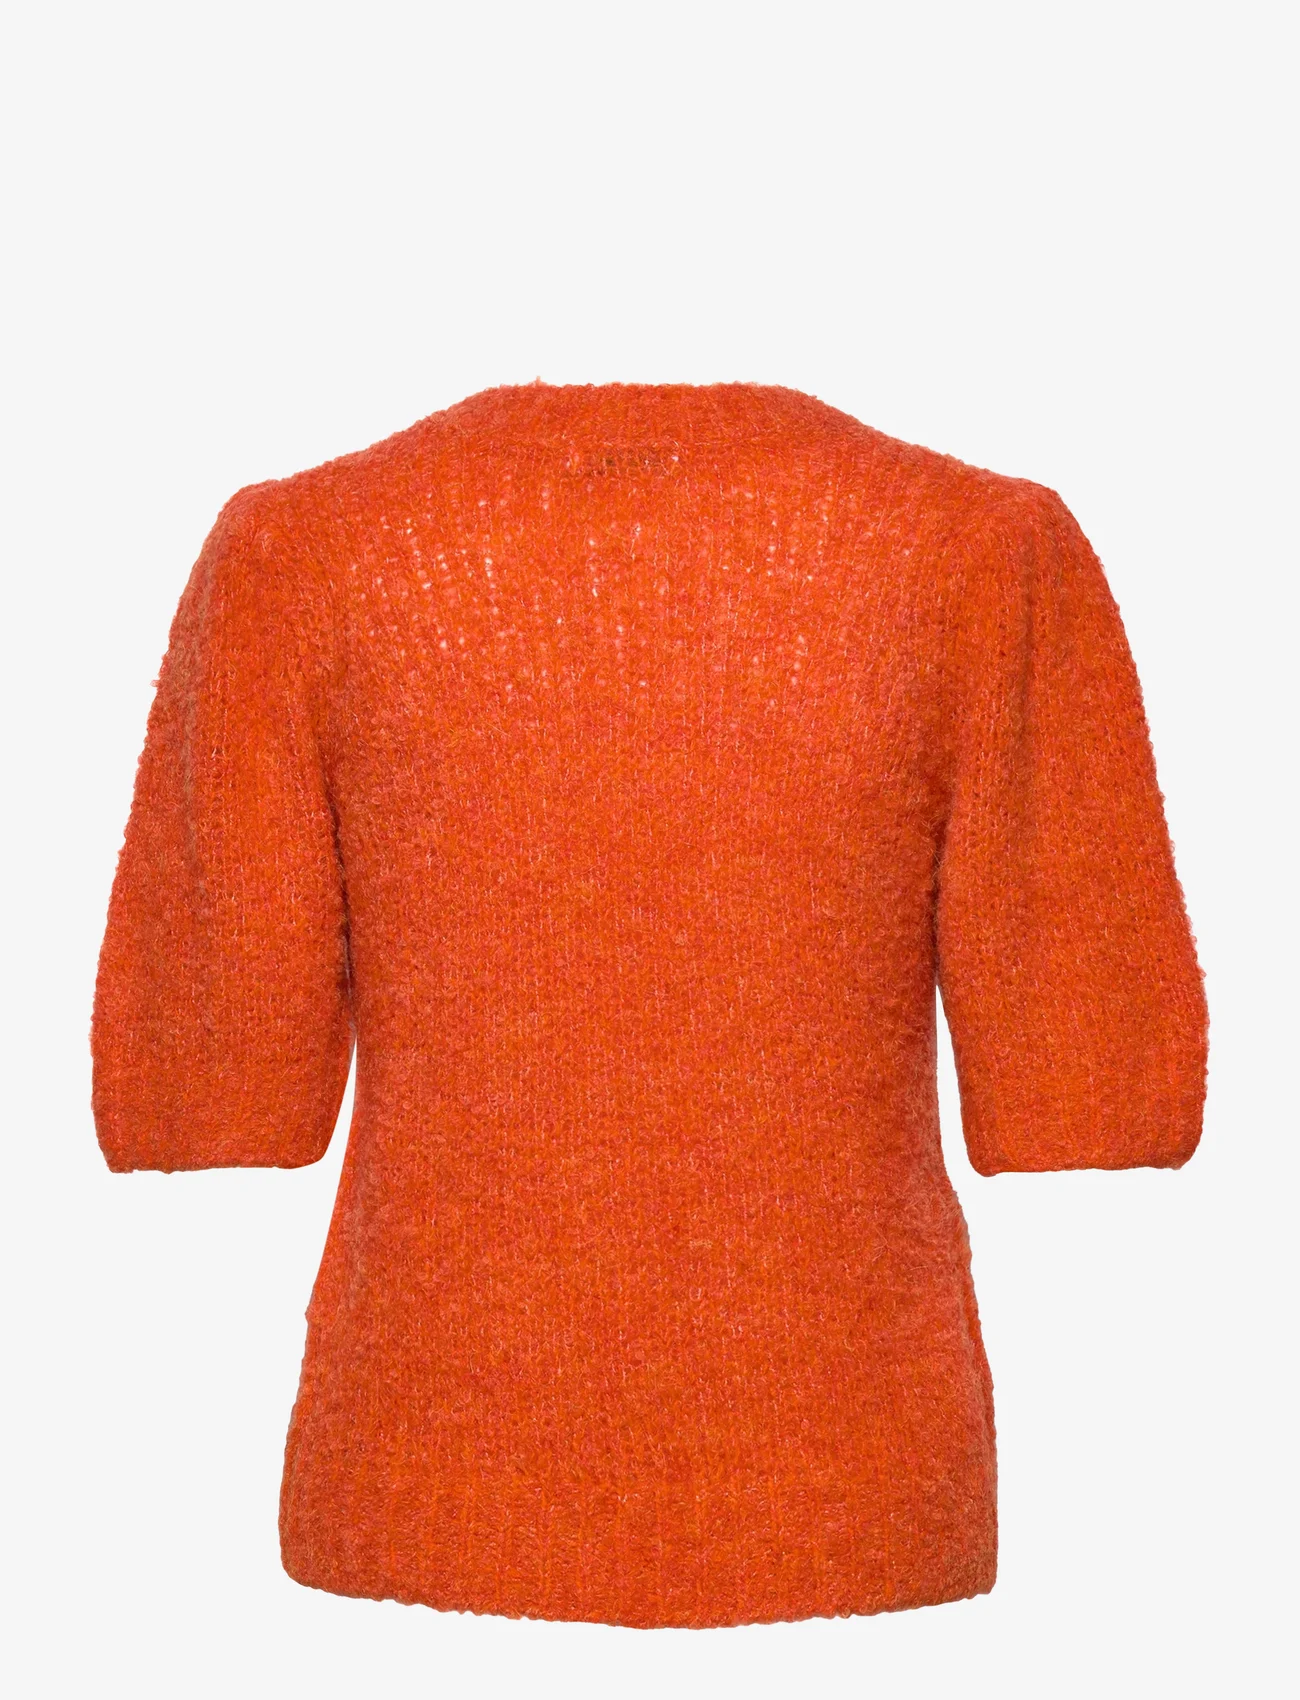 Coster Copenhagen - Knit with puff sleeves - jumpers - orange melange - 1